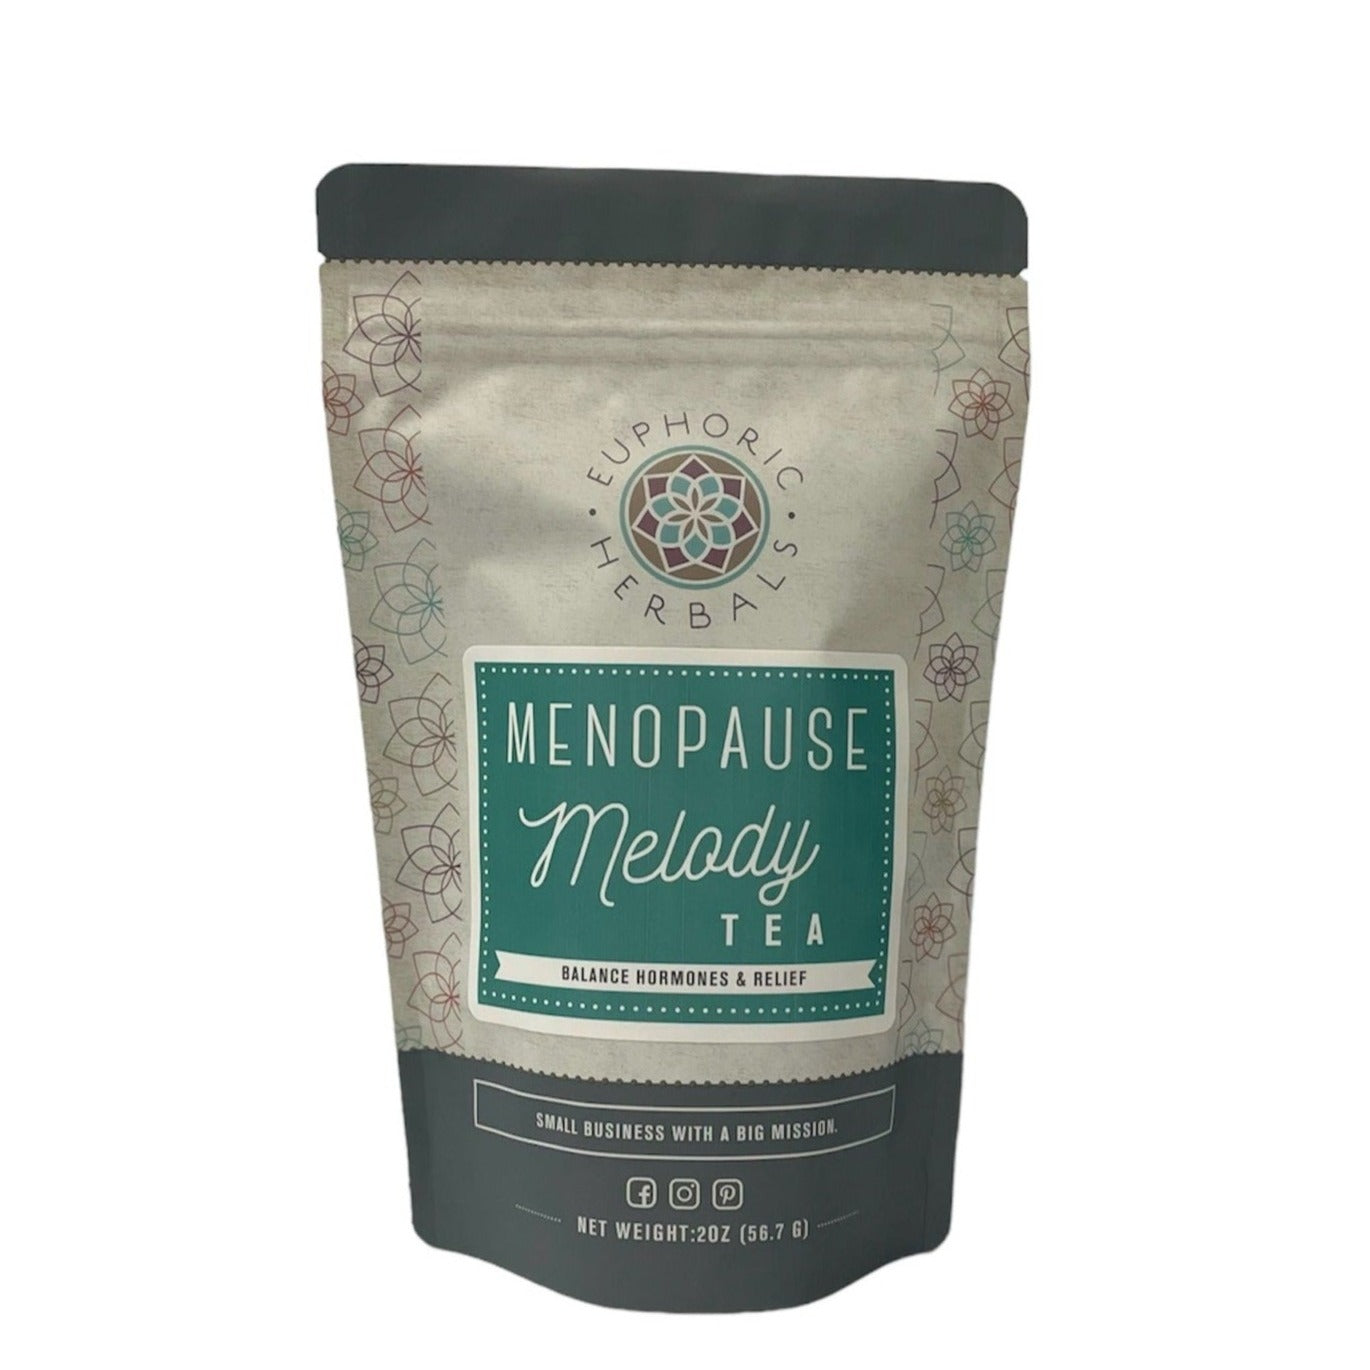 Menopause Melody